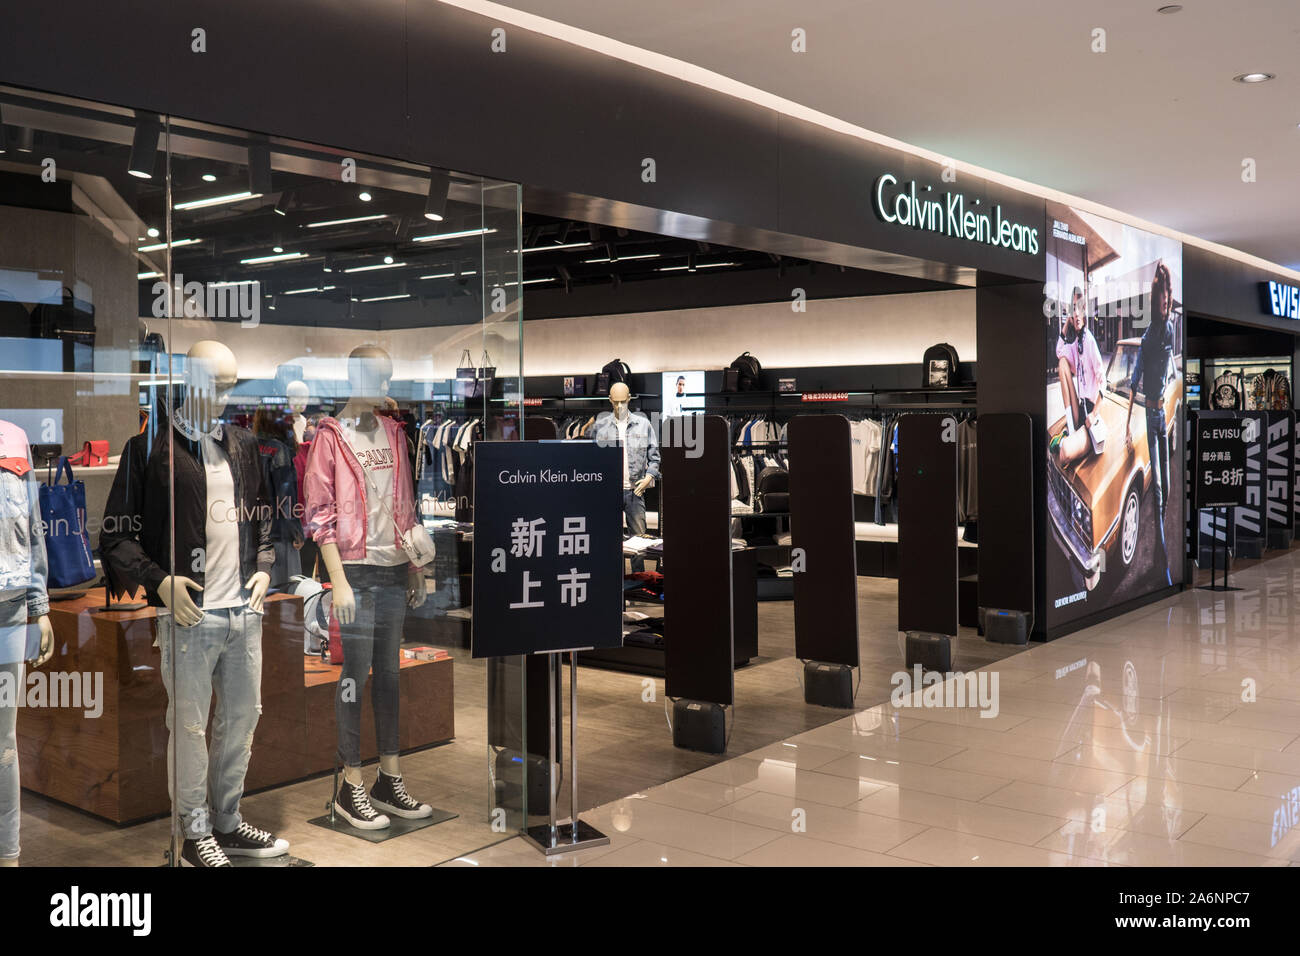 Calvin Klein Outlet Return Policy Flash Sales, 57% OFF | bc-autonomo.cl